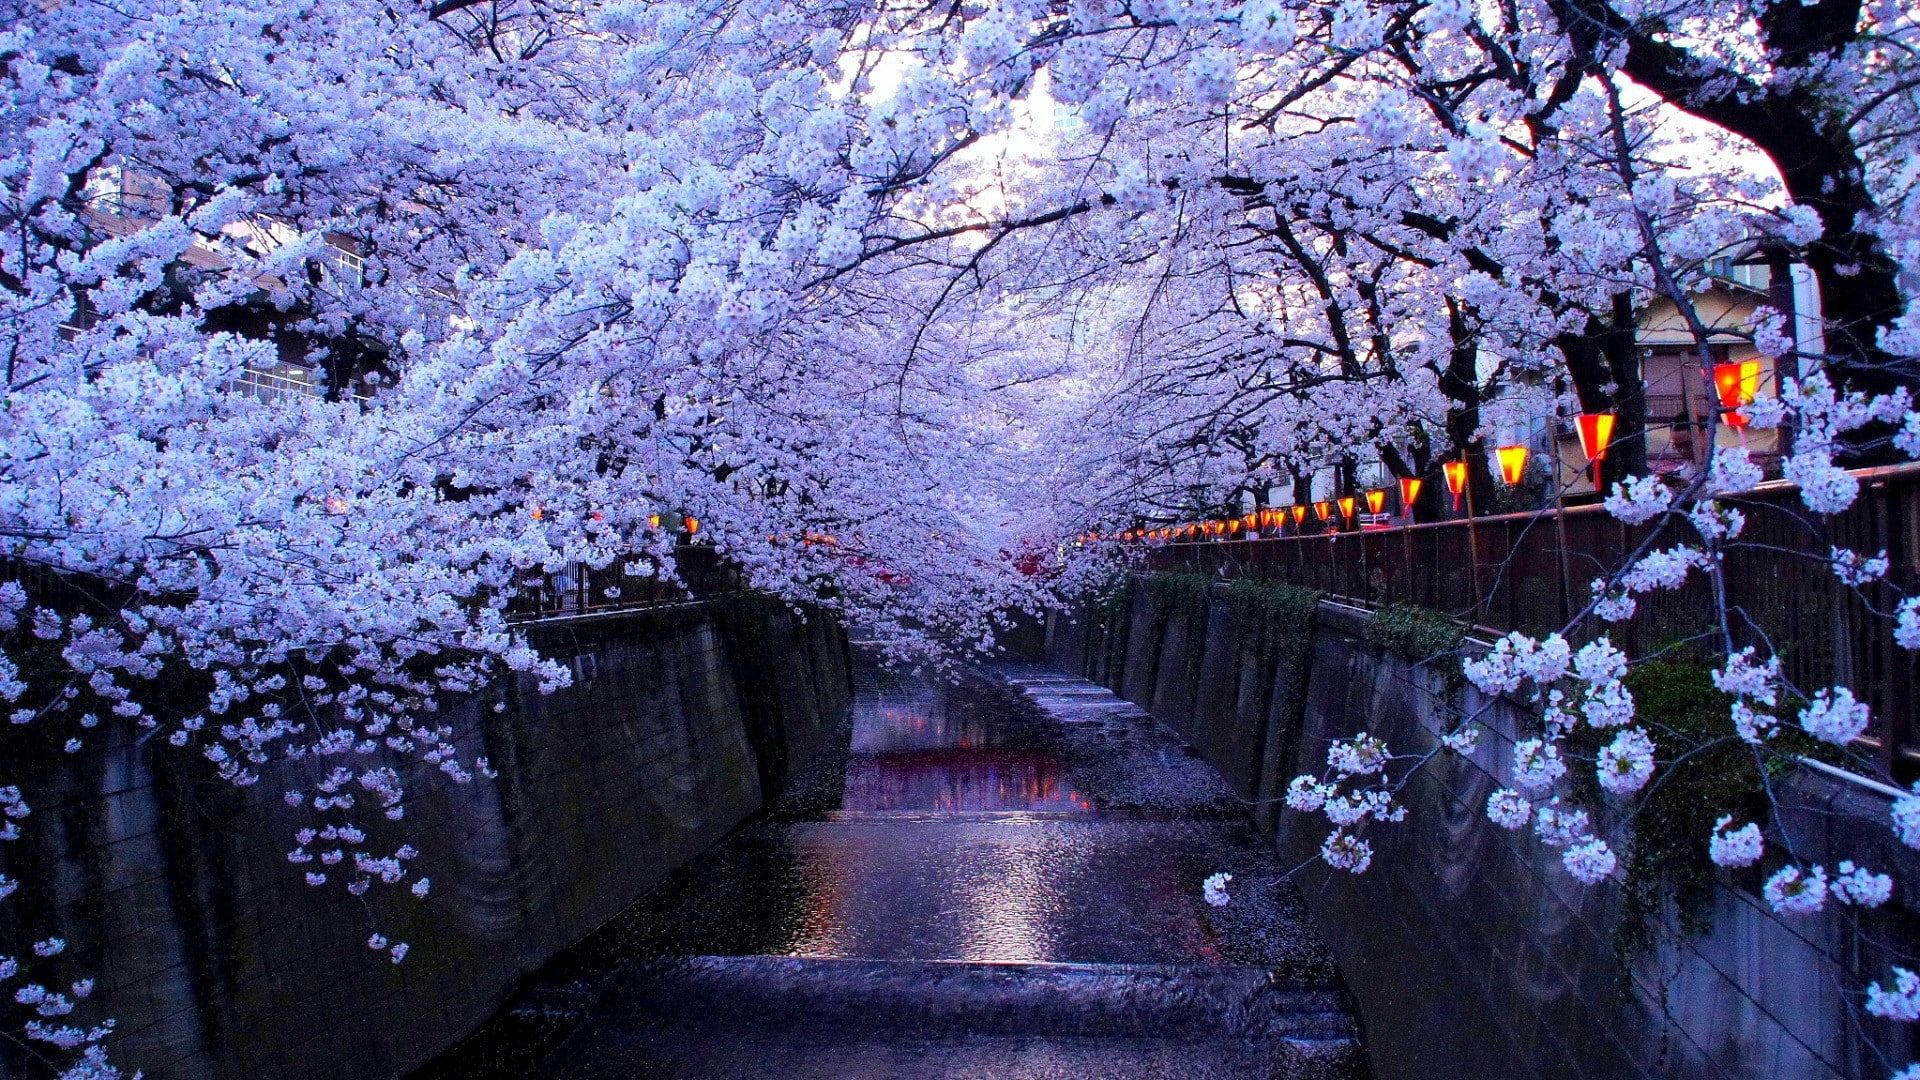 meguro river #tokyo #japan #blossom cherry blossom #spring cherry tree #flowery #branch #tree #water flo. Cherry blossom wallpaper, Anime flower, Spring wallpaper